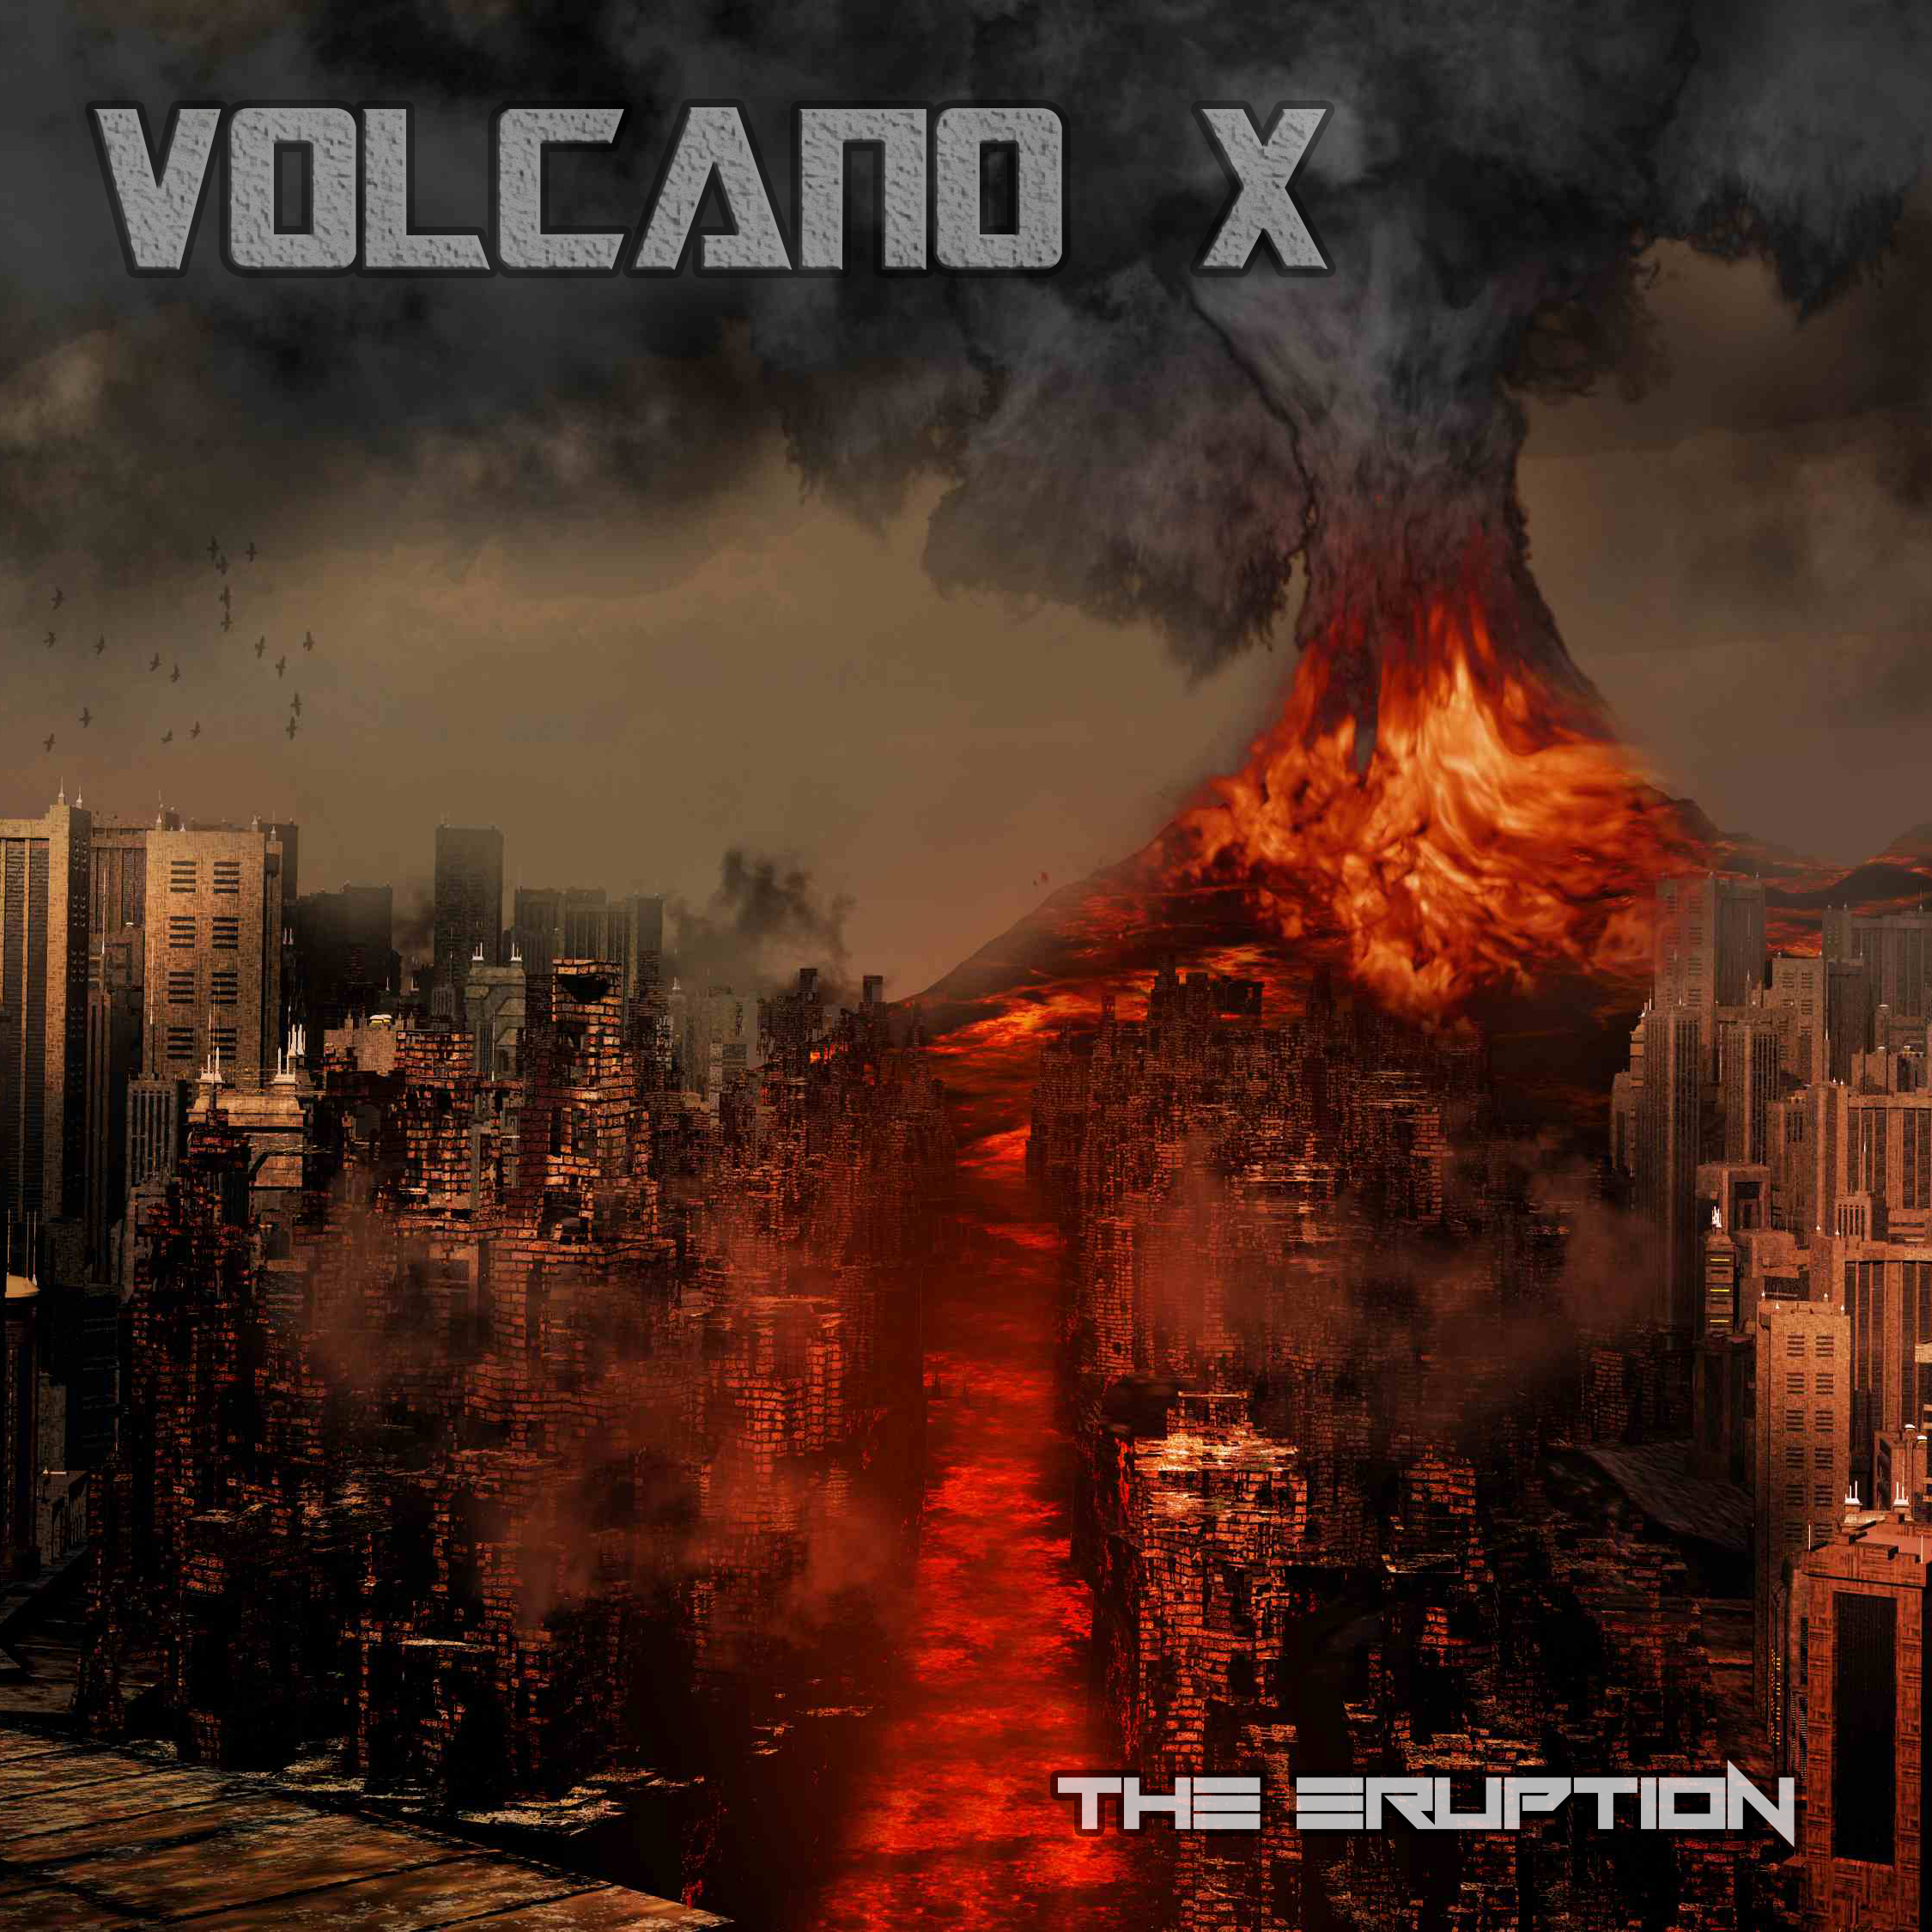 The Eruption - Volcano X